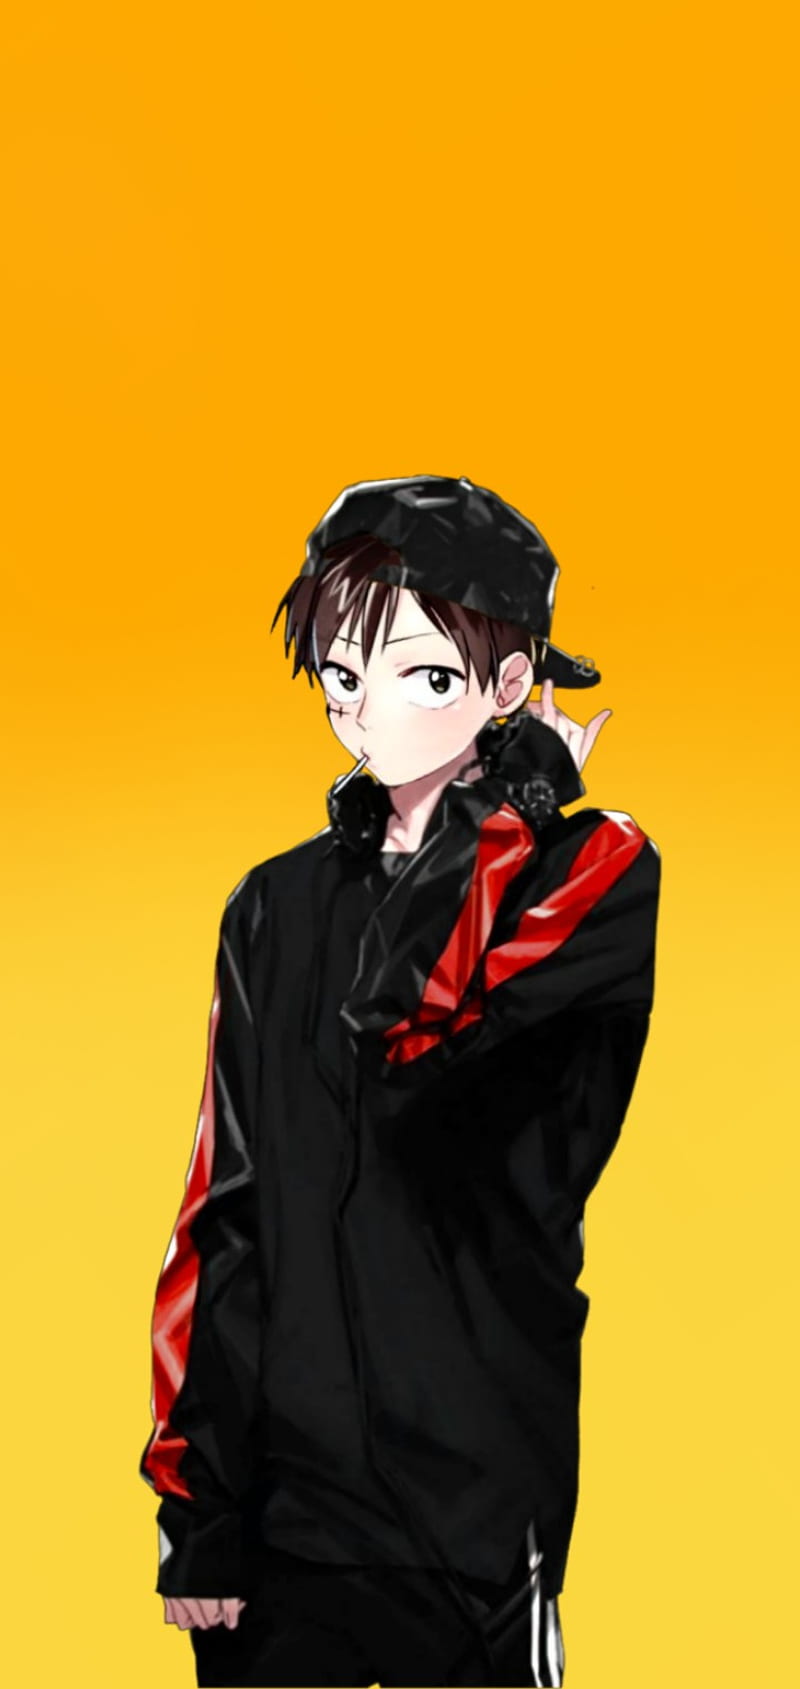 Tải xuống APK Anime Boy Wallpaper HD | Handsome Anime Boys 4K cho Android